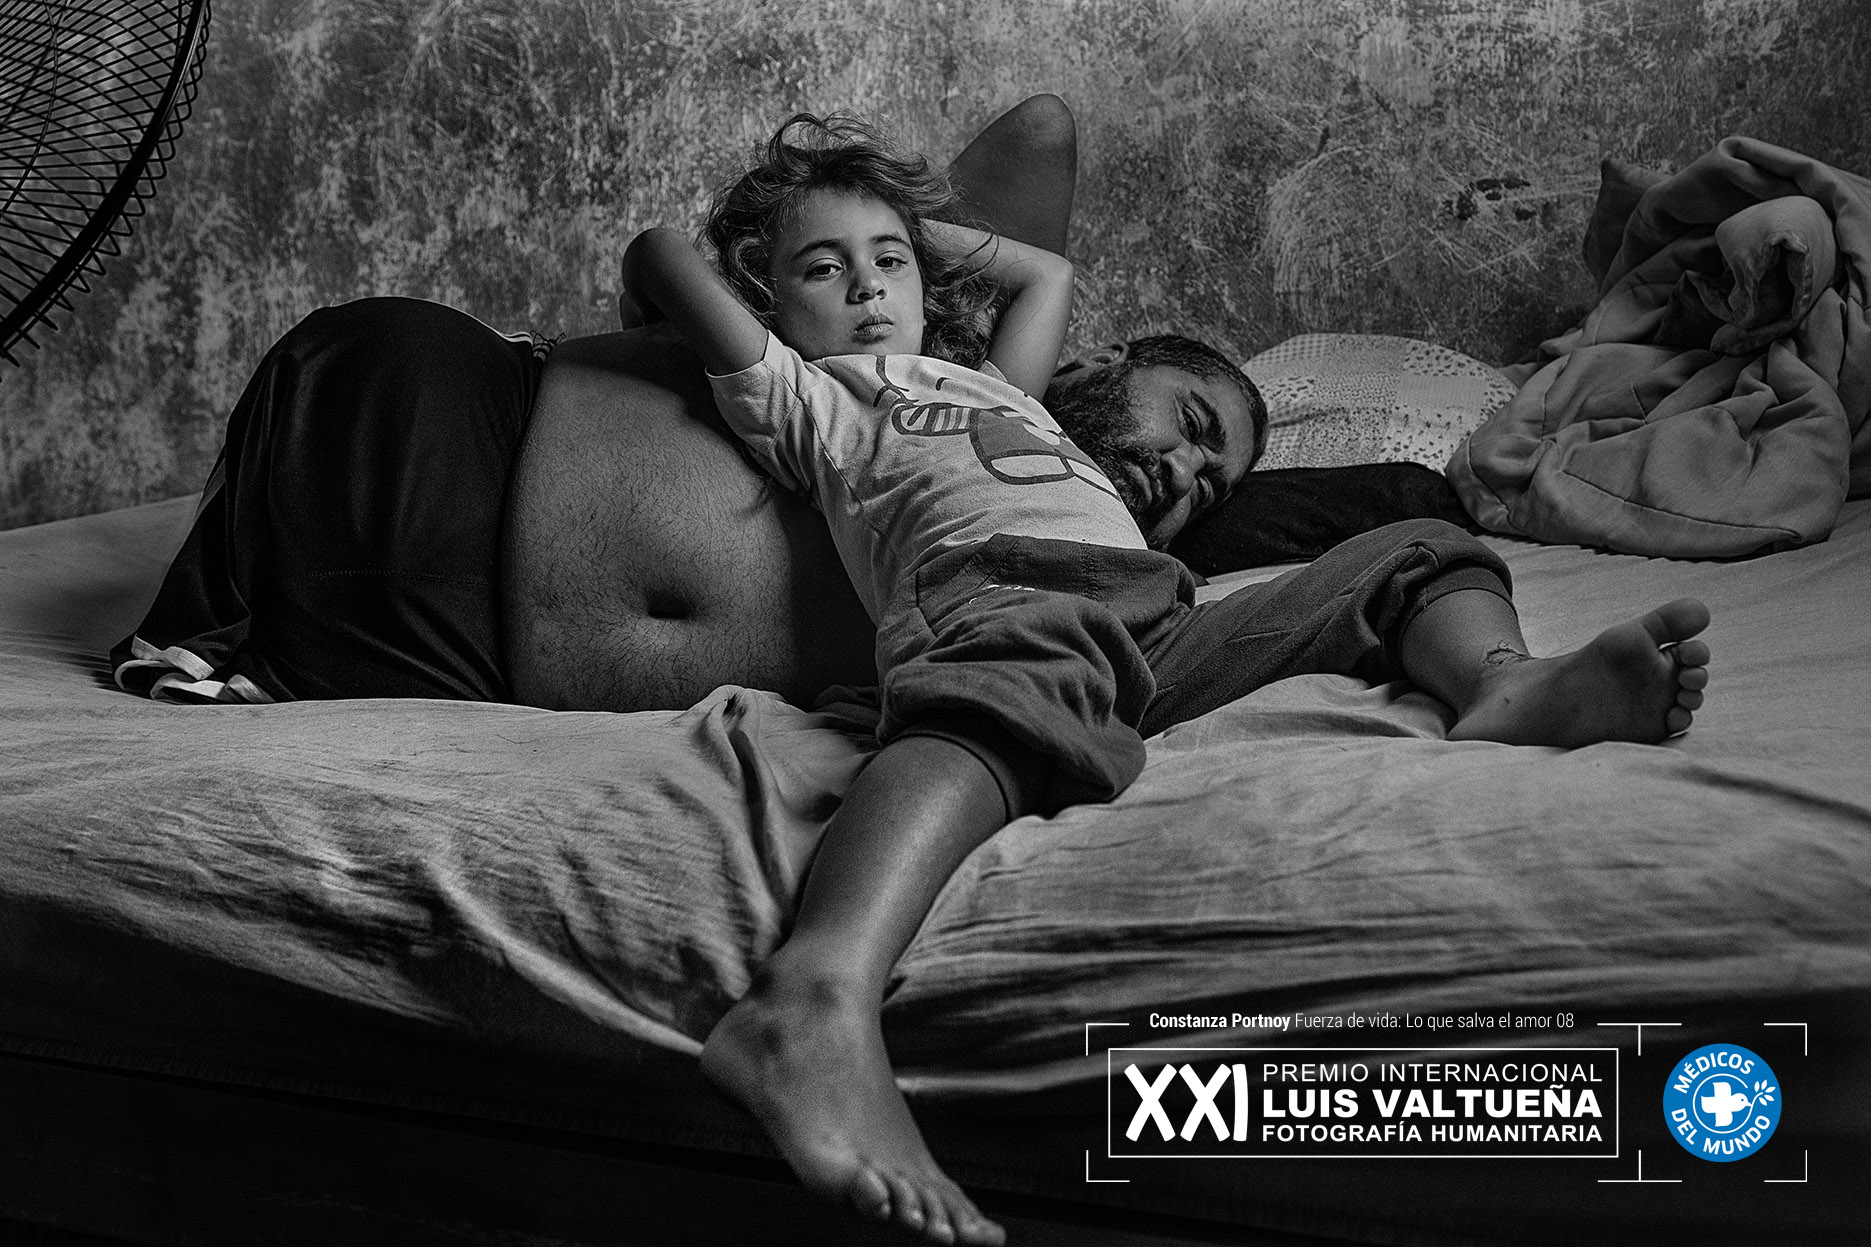 Luis Valtueña International Humanitarian Photography Award 2018 (up to 6,000 Euros)